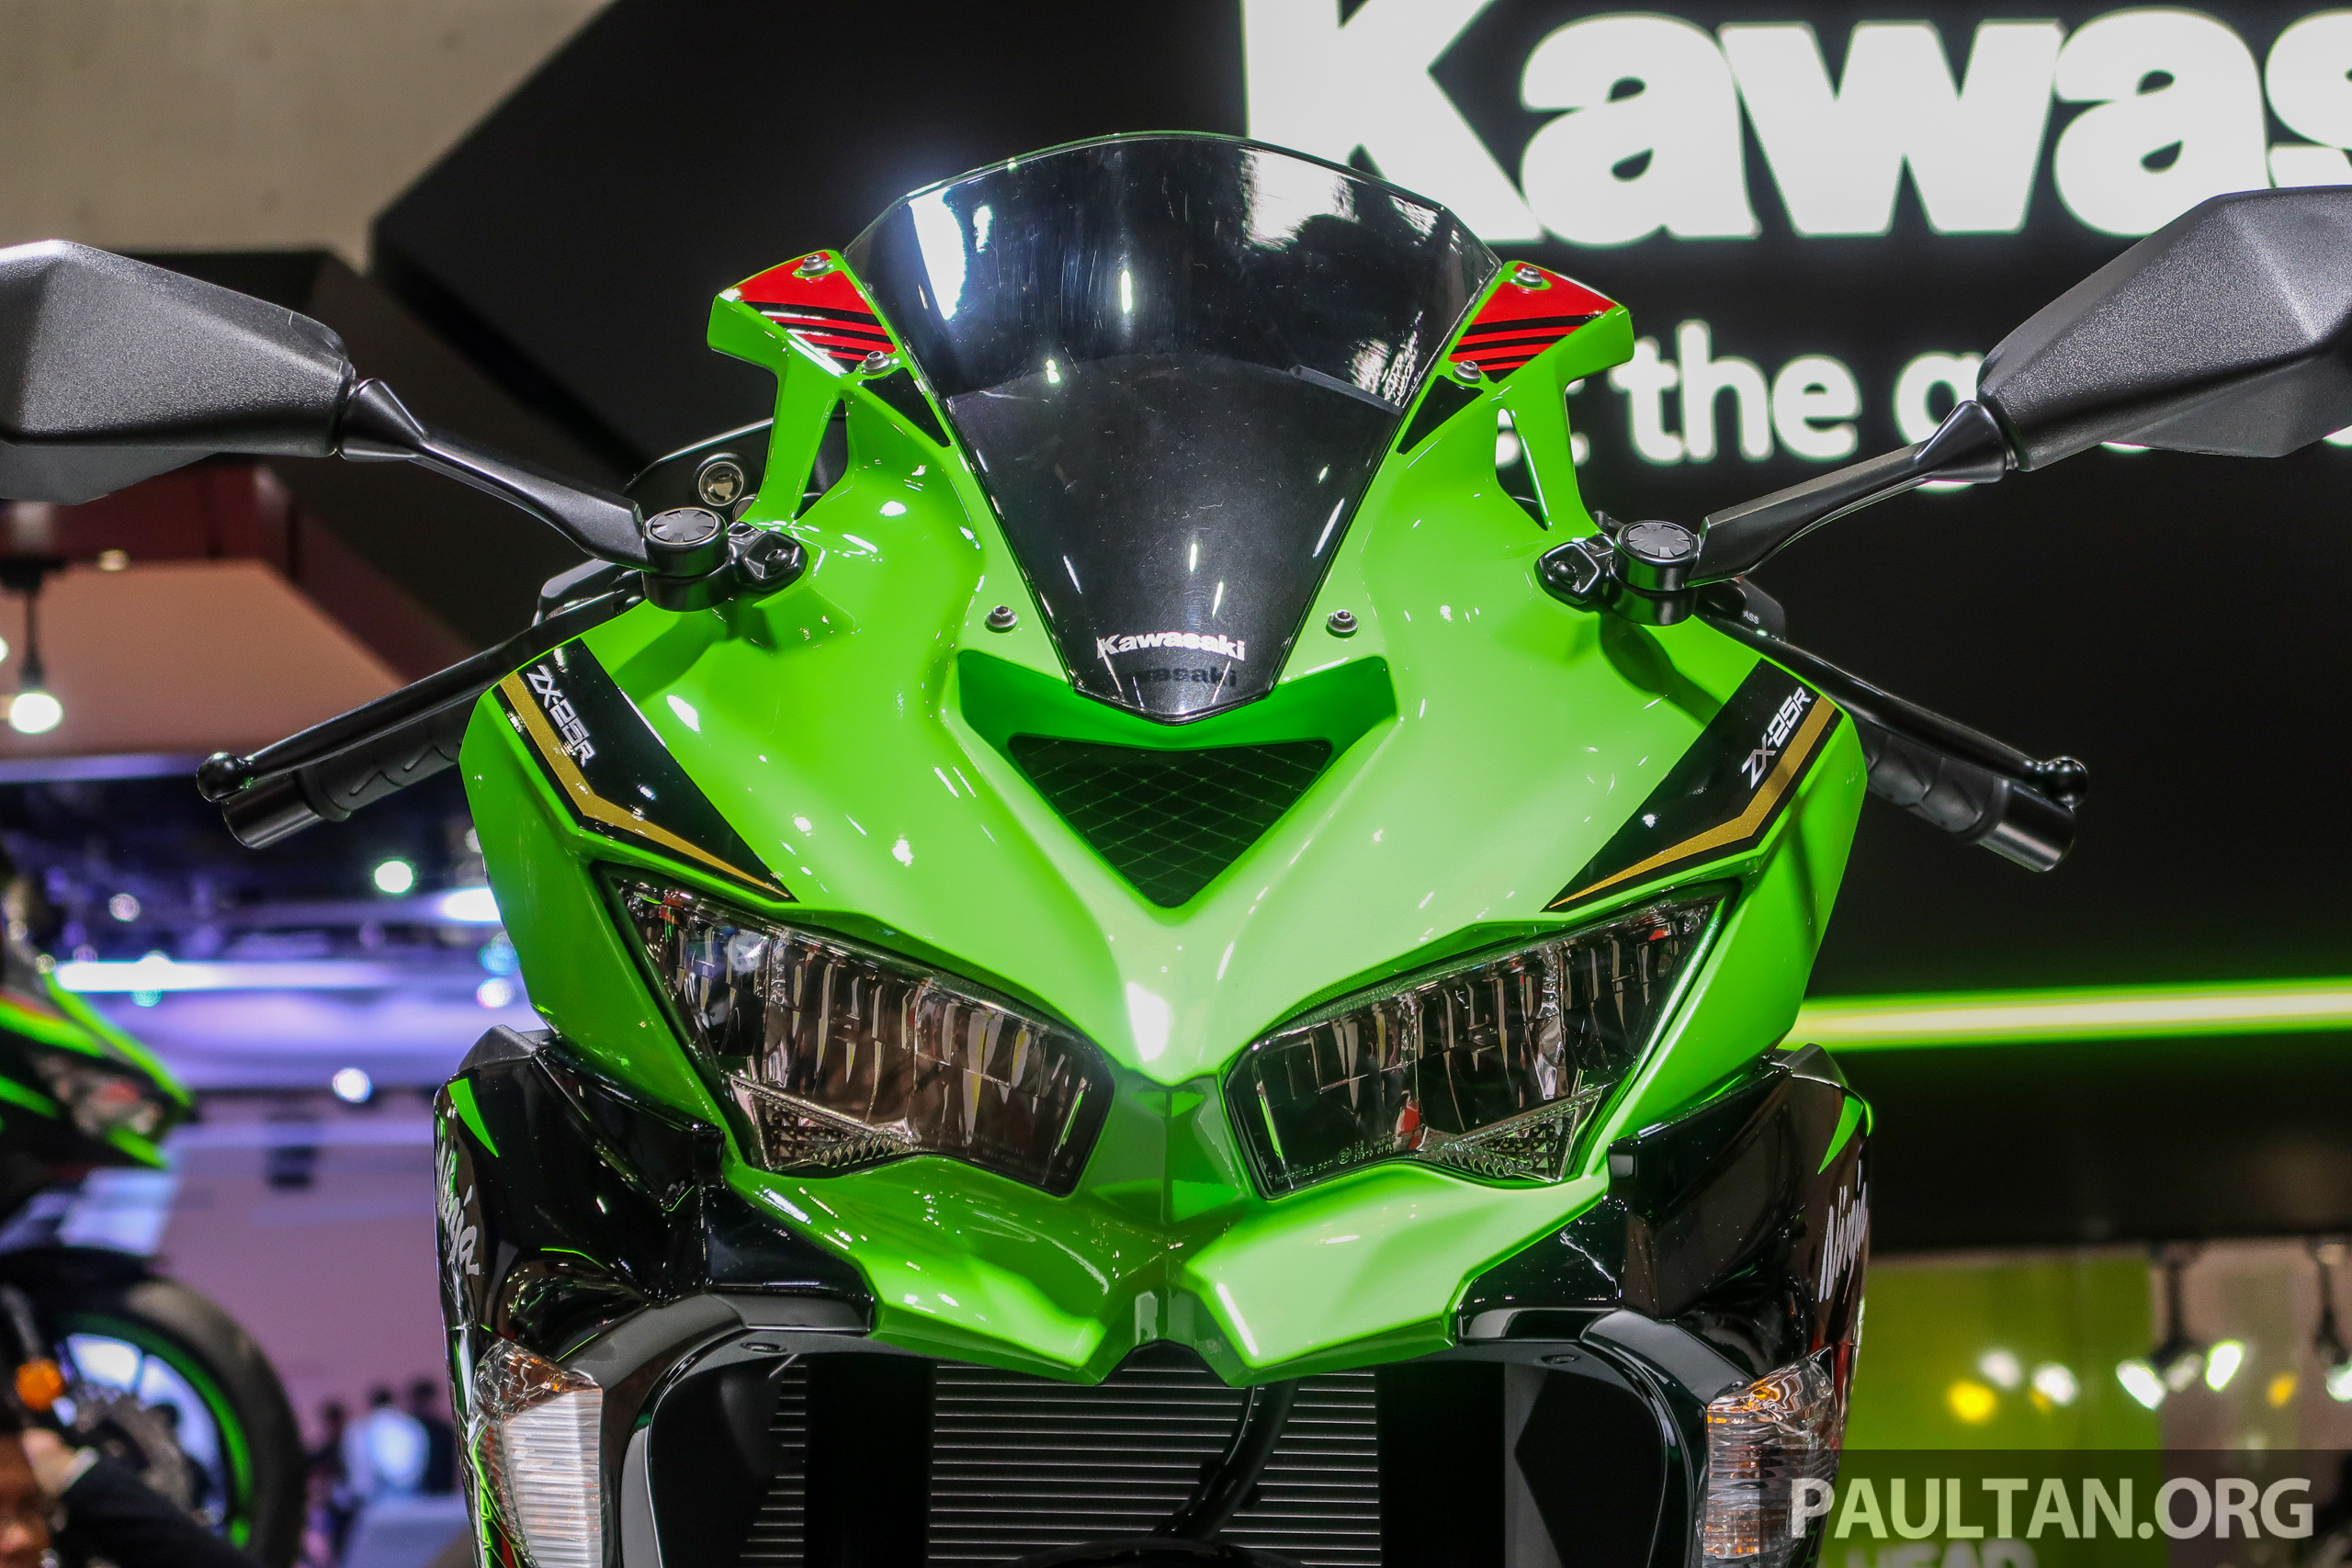 https://s1.paultan.org/image/2020/05/Kawasaki-Ninja-ZX-25R-Tokyo-Motor-Show-2019-ENG-5-1.jpg